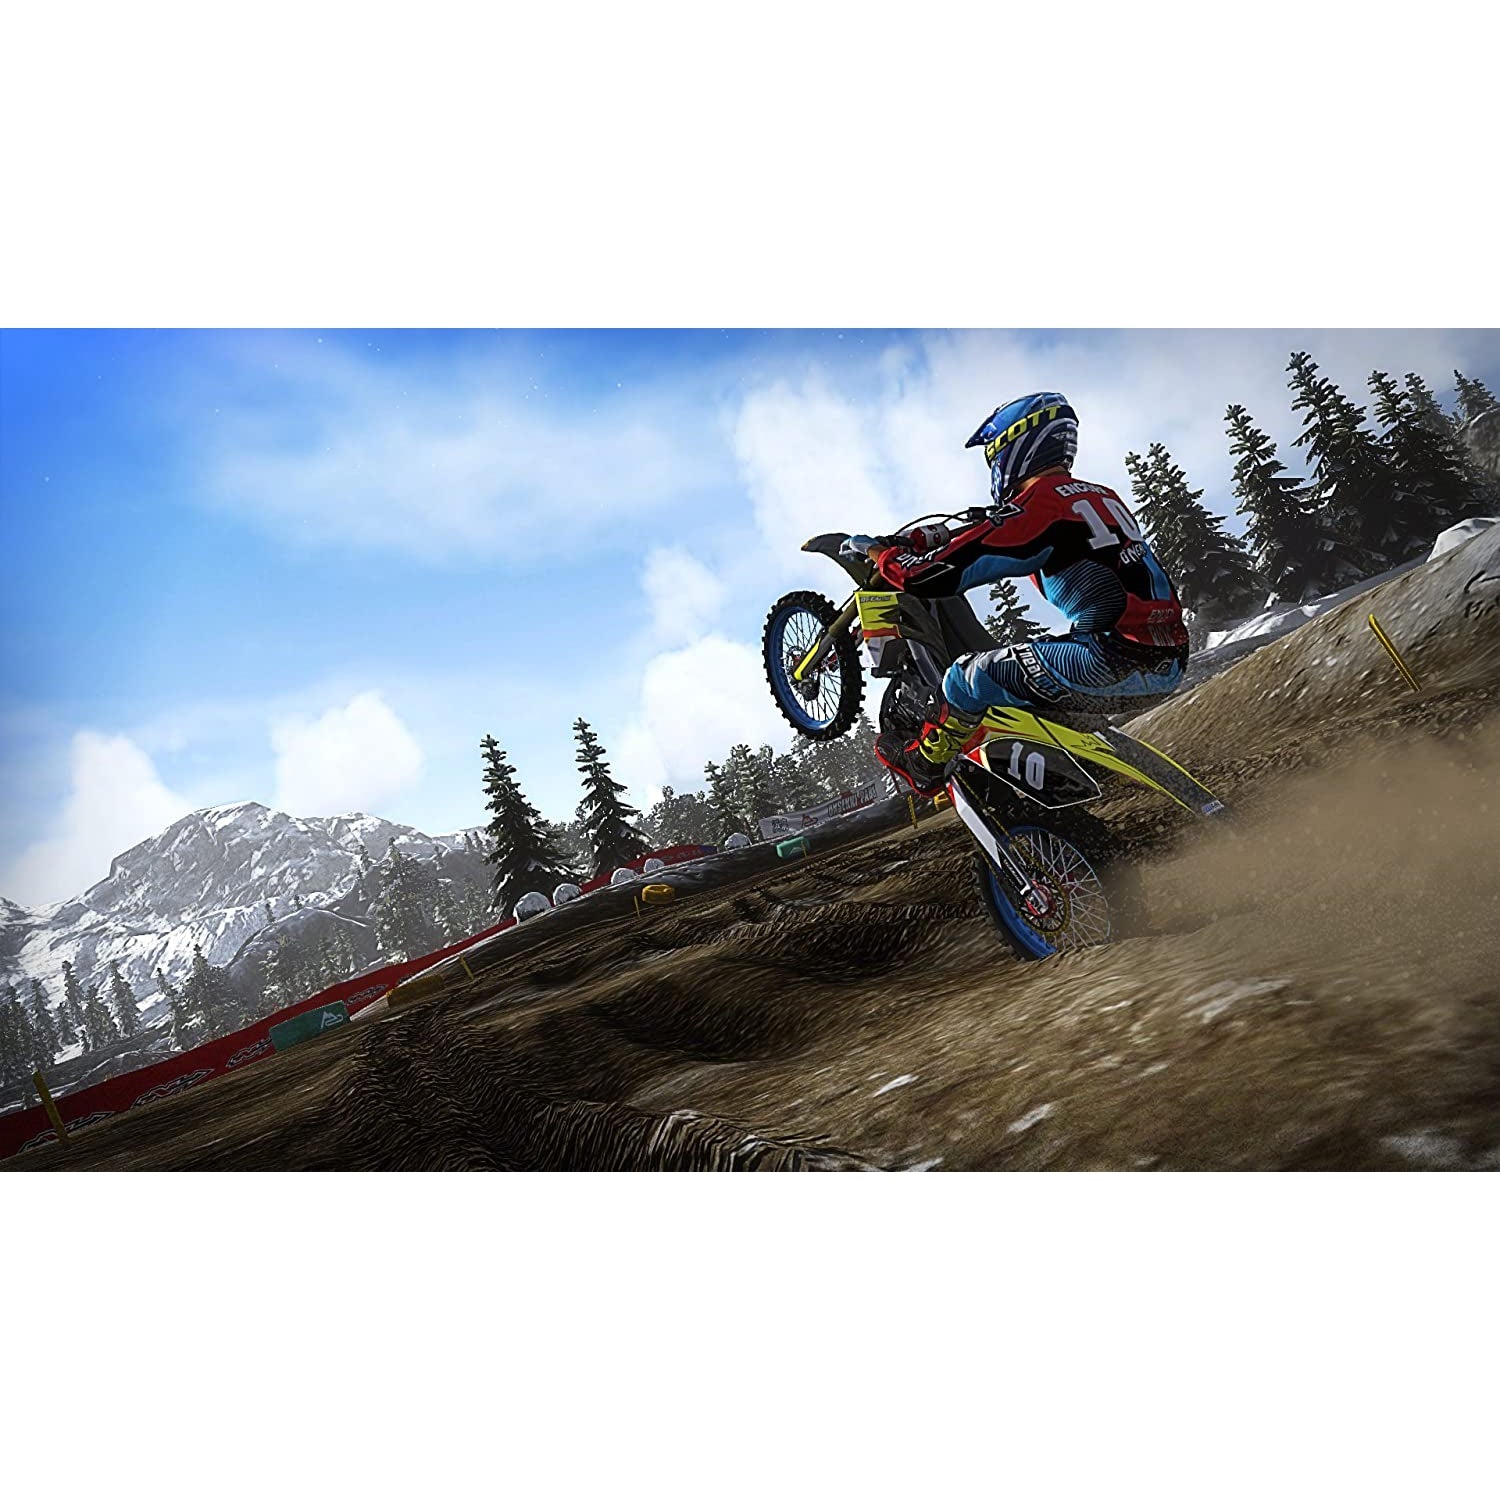 MX Vs ATV Supercross Encore Edition (PS4)